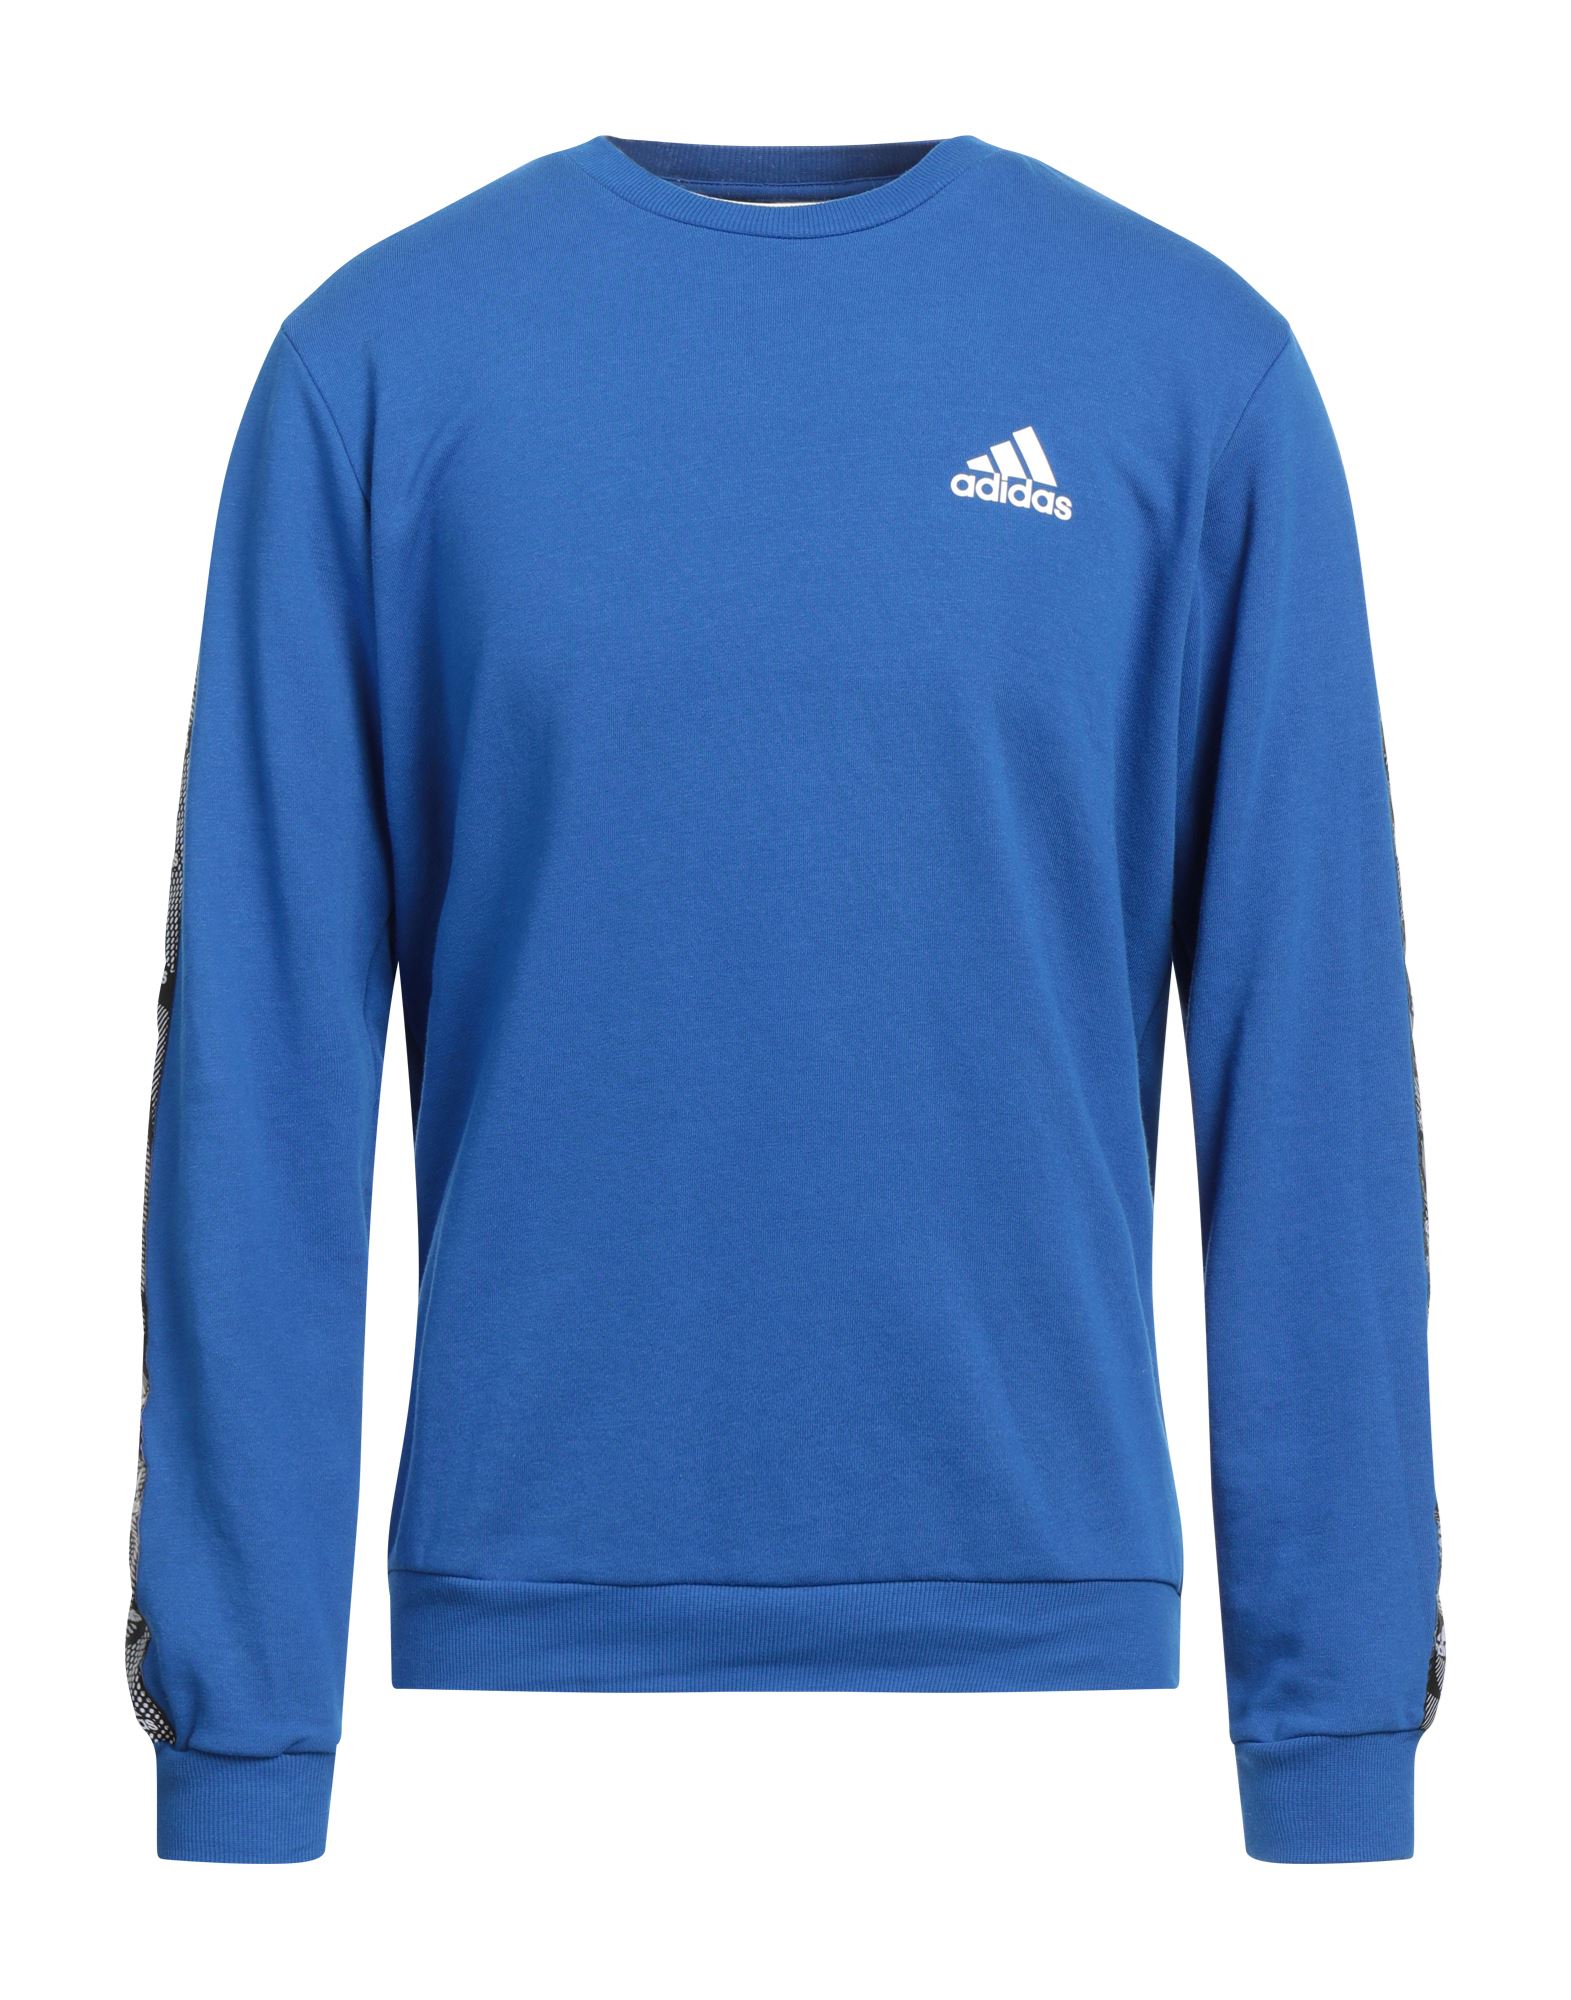 Adidas Originals Sweatshirts In Blue